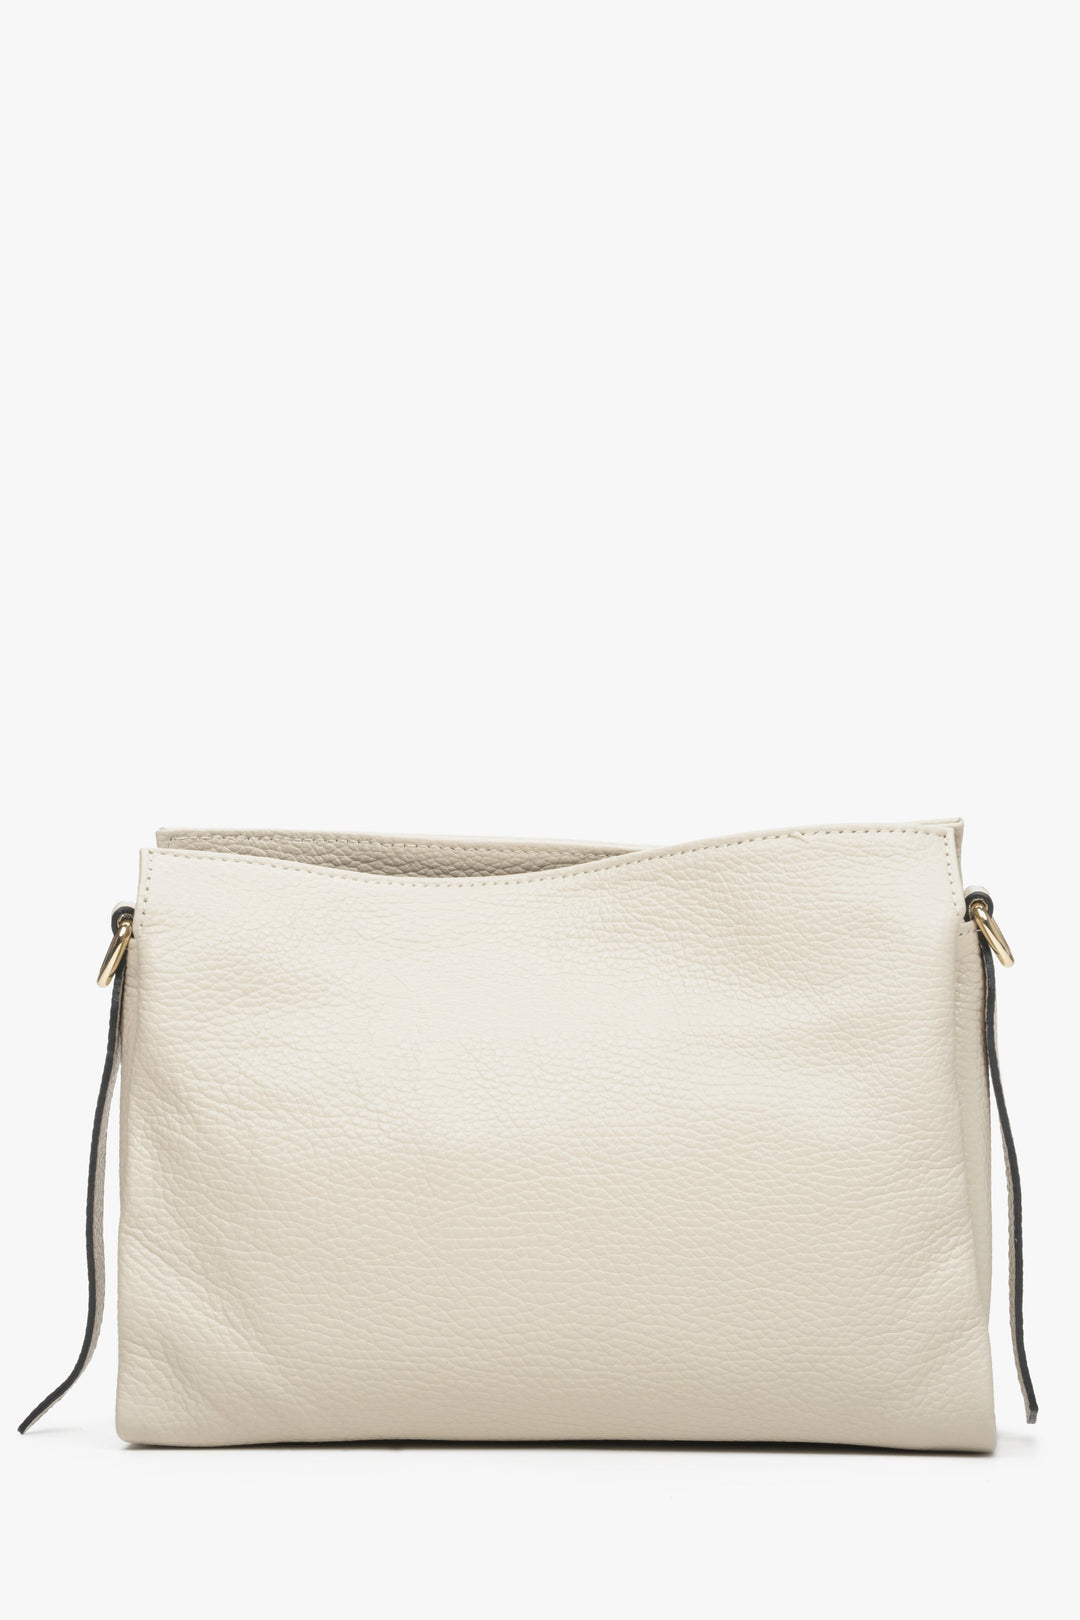 Women's beige crossbody bag made from Italian genuine leather, by Estro.